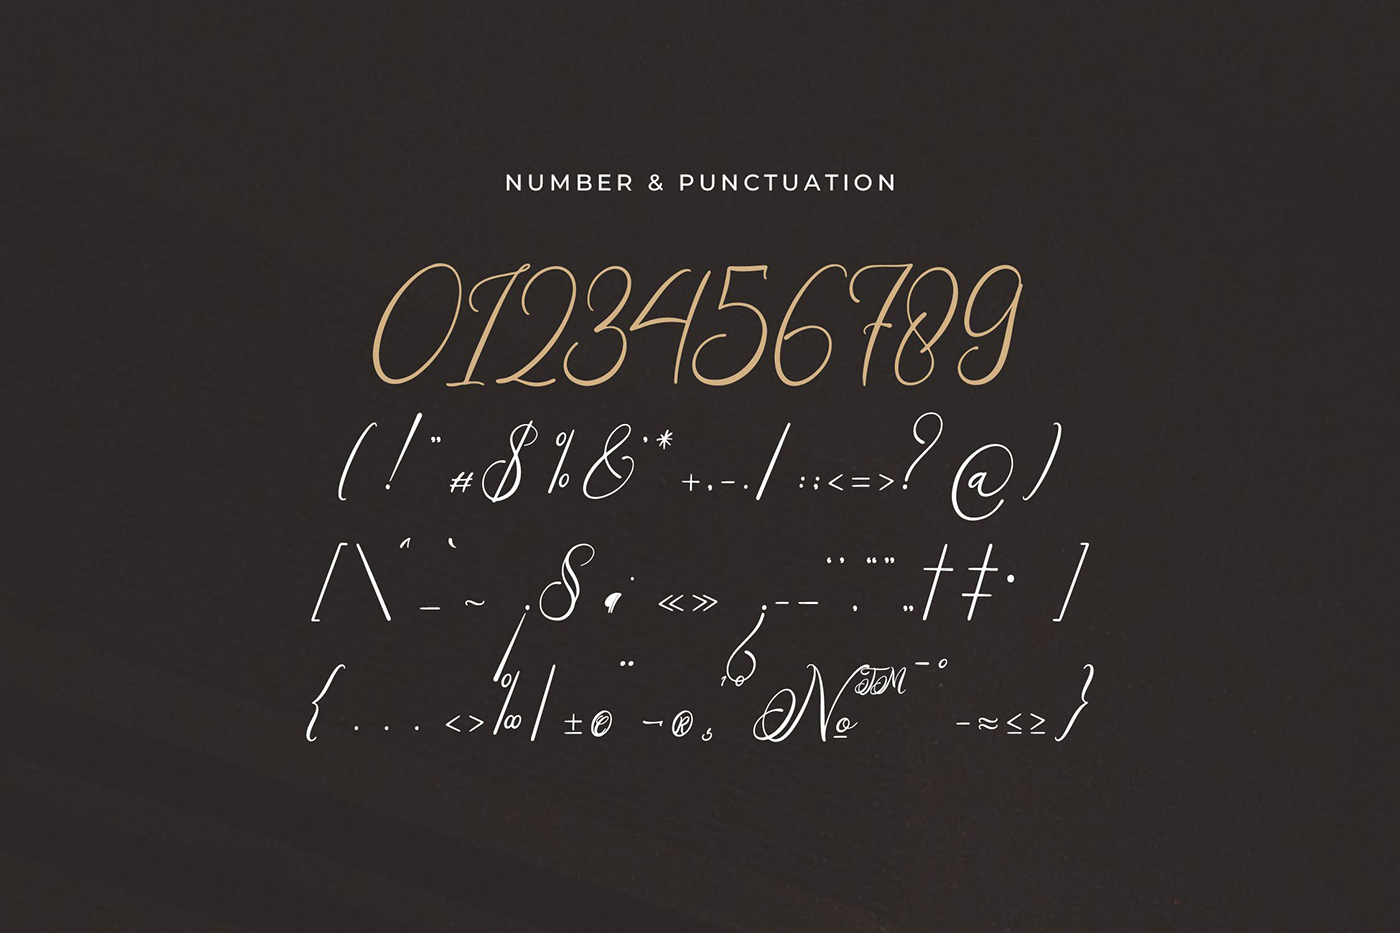 Teofandin Levantamy numbers and punctuation